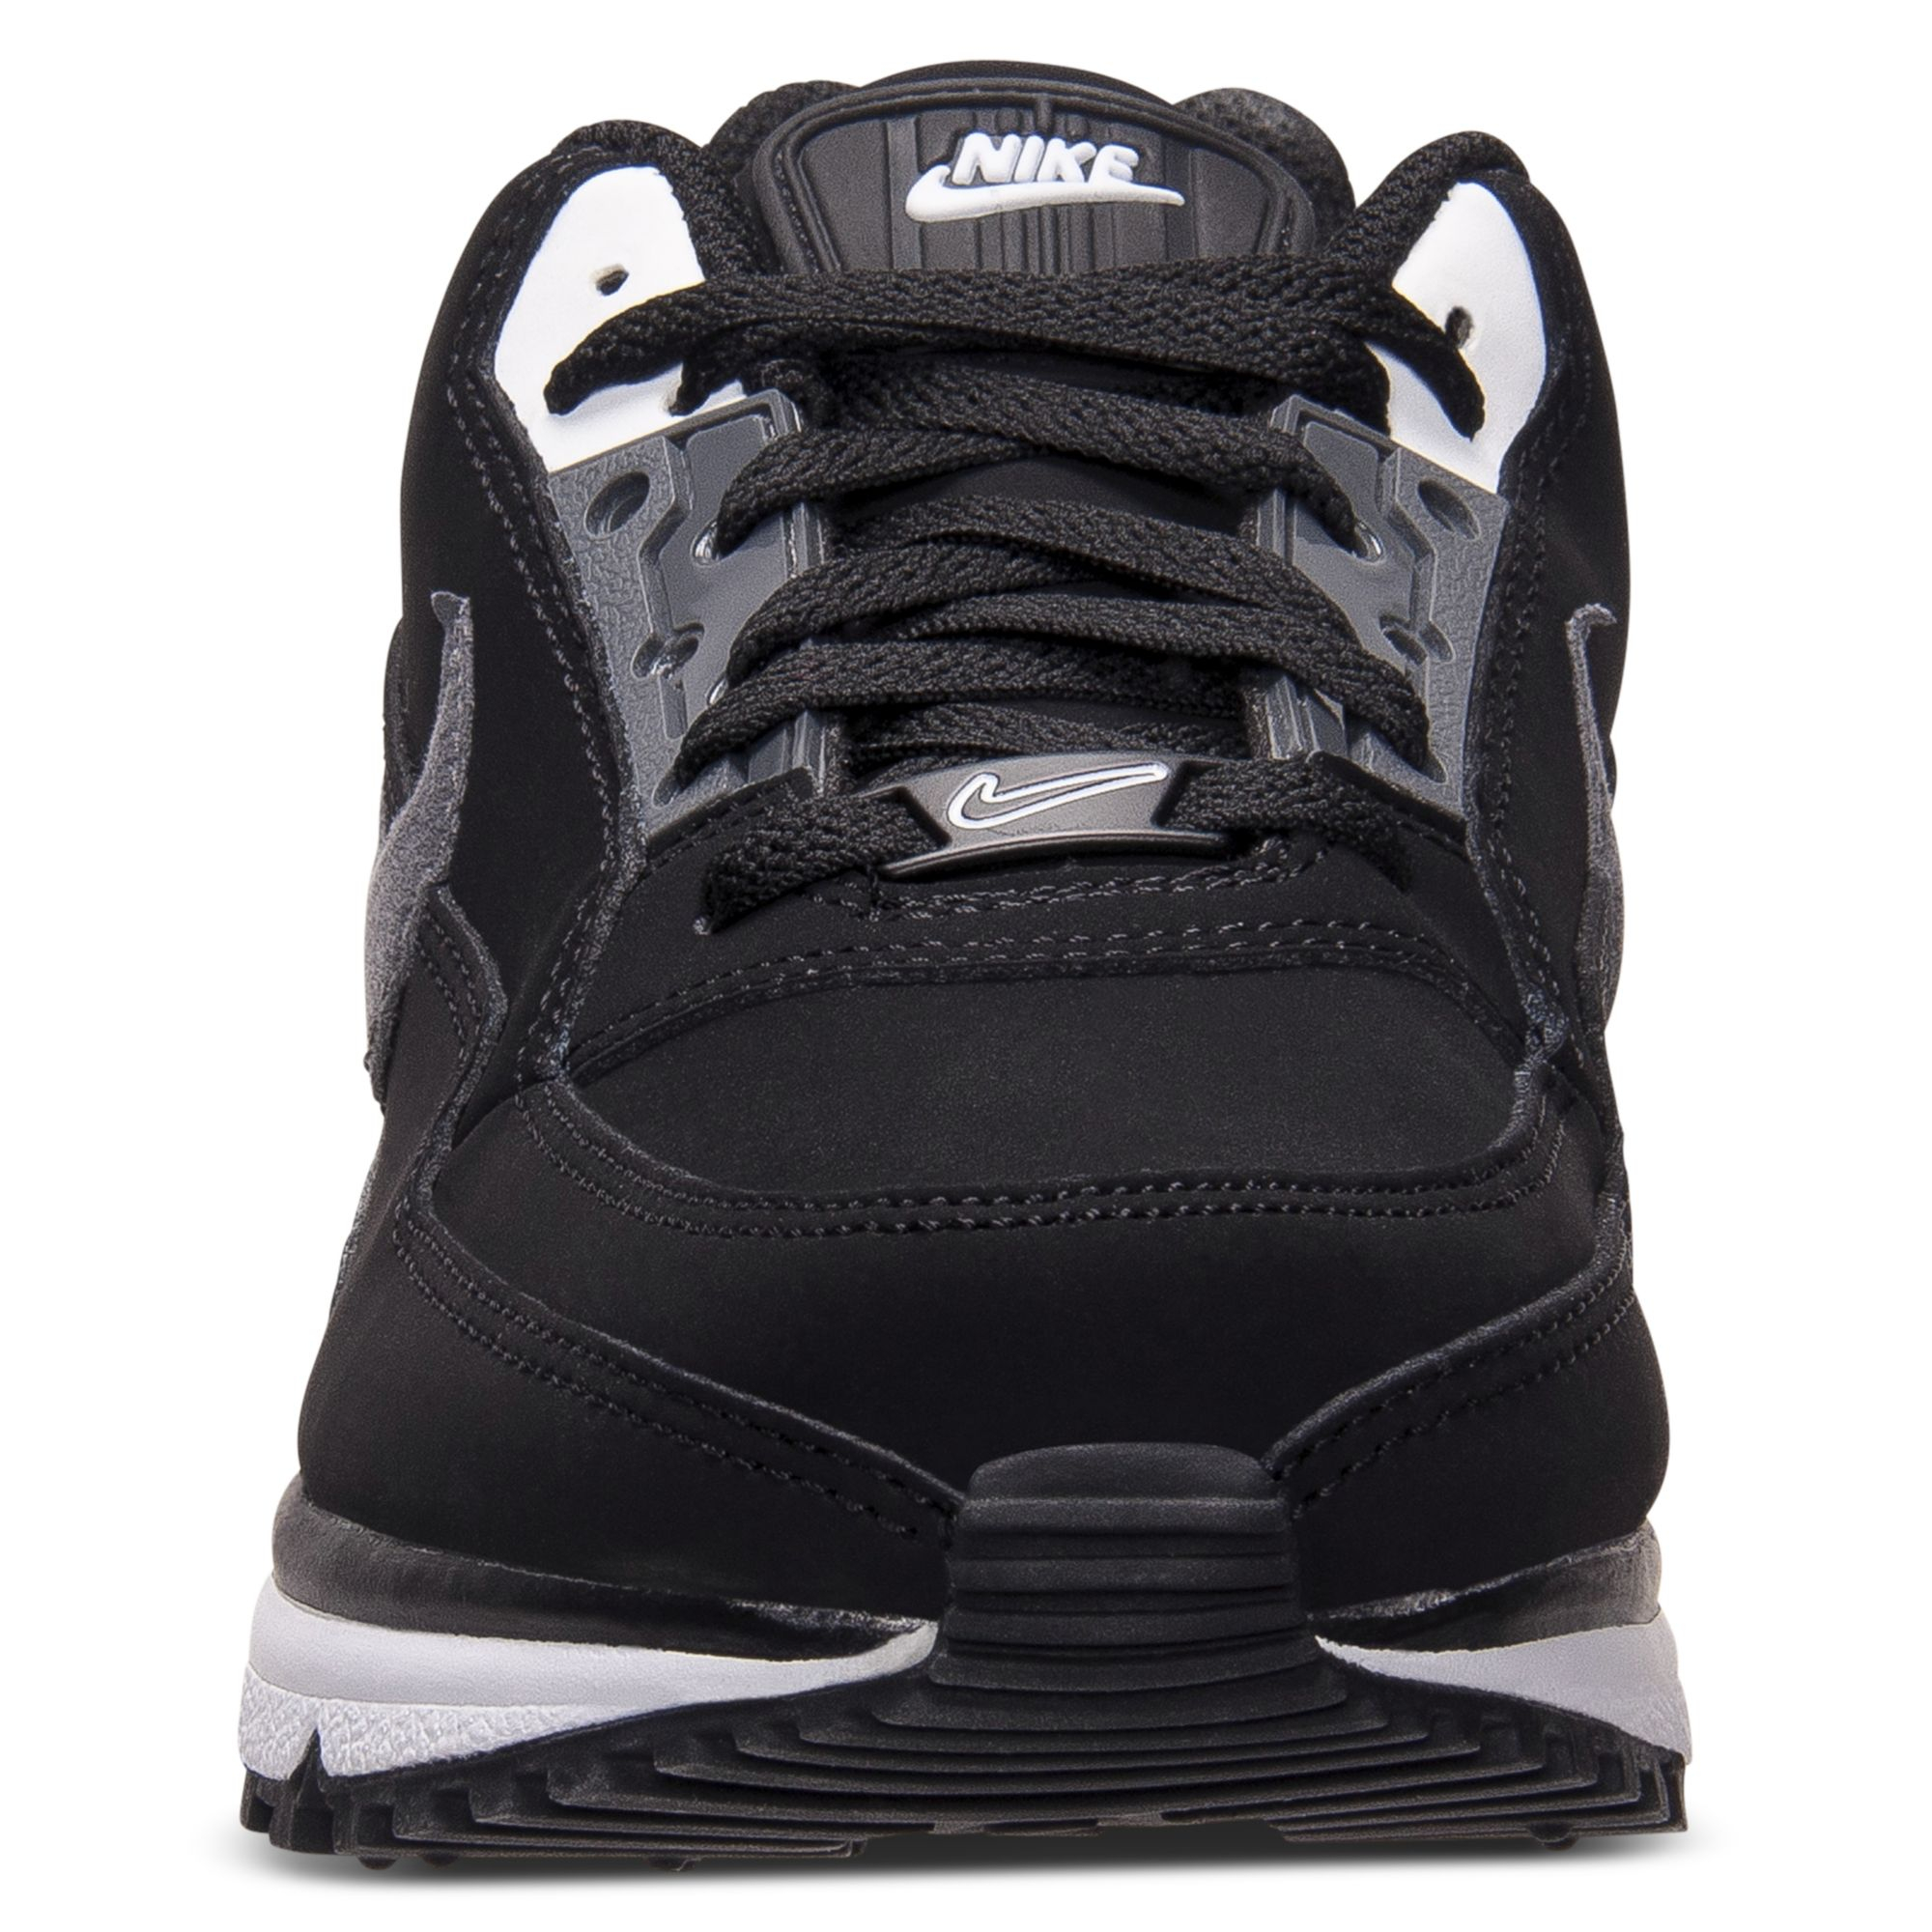 Nike Air Max Ltd Running Sneakers in Black/White/Dark Grey (Black) for ...